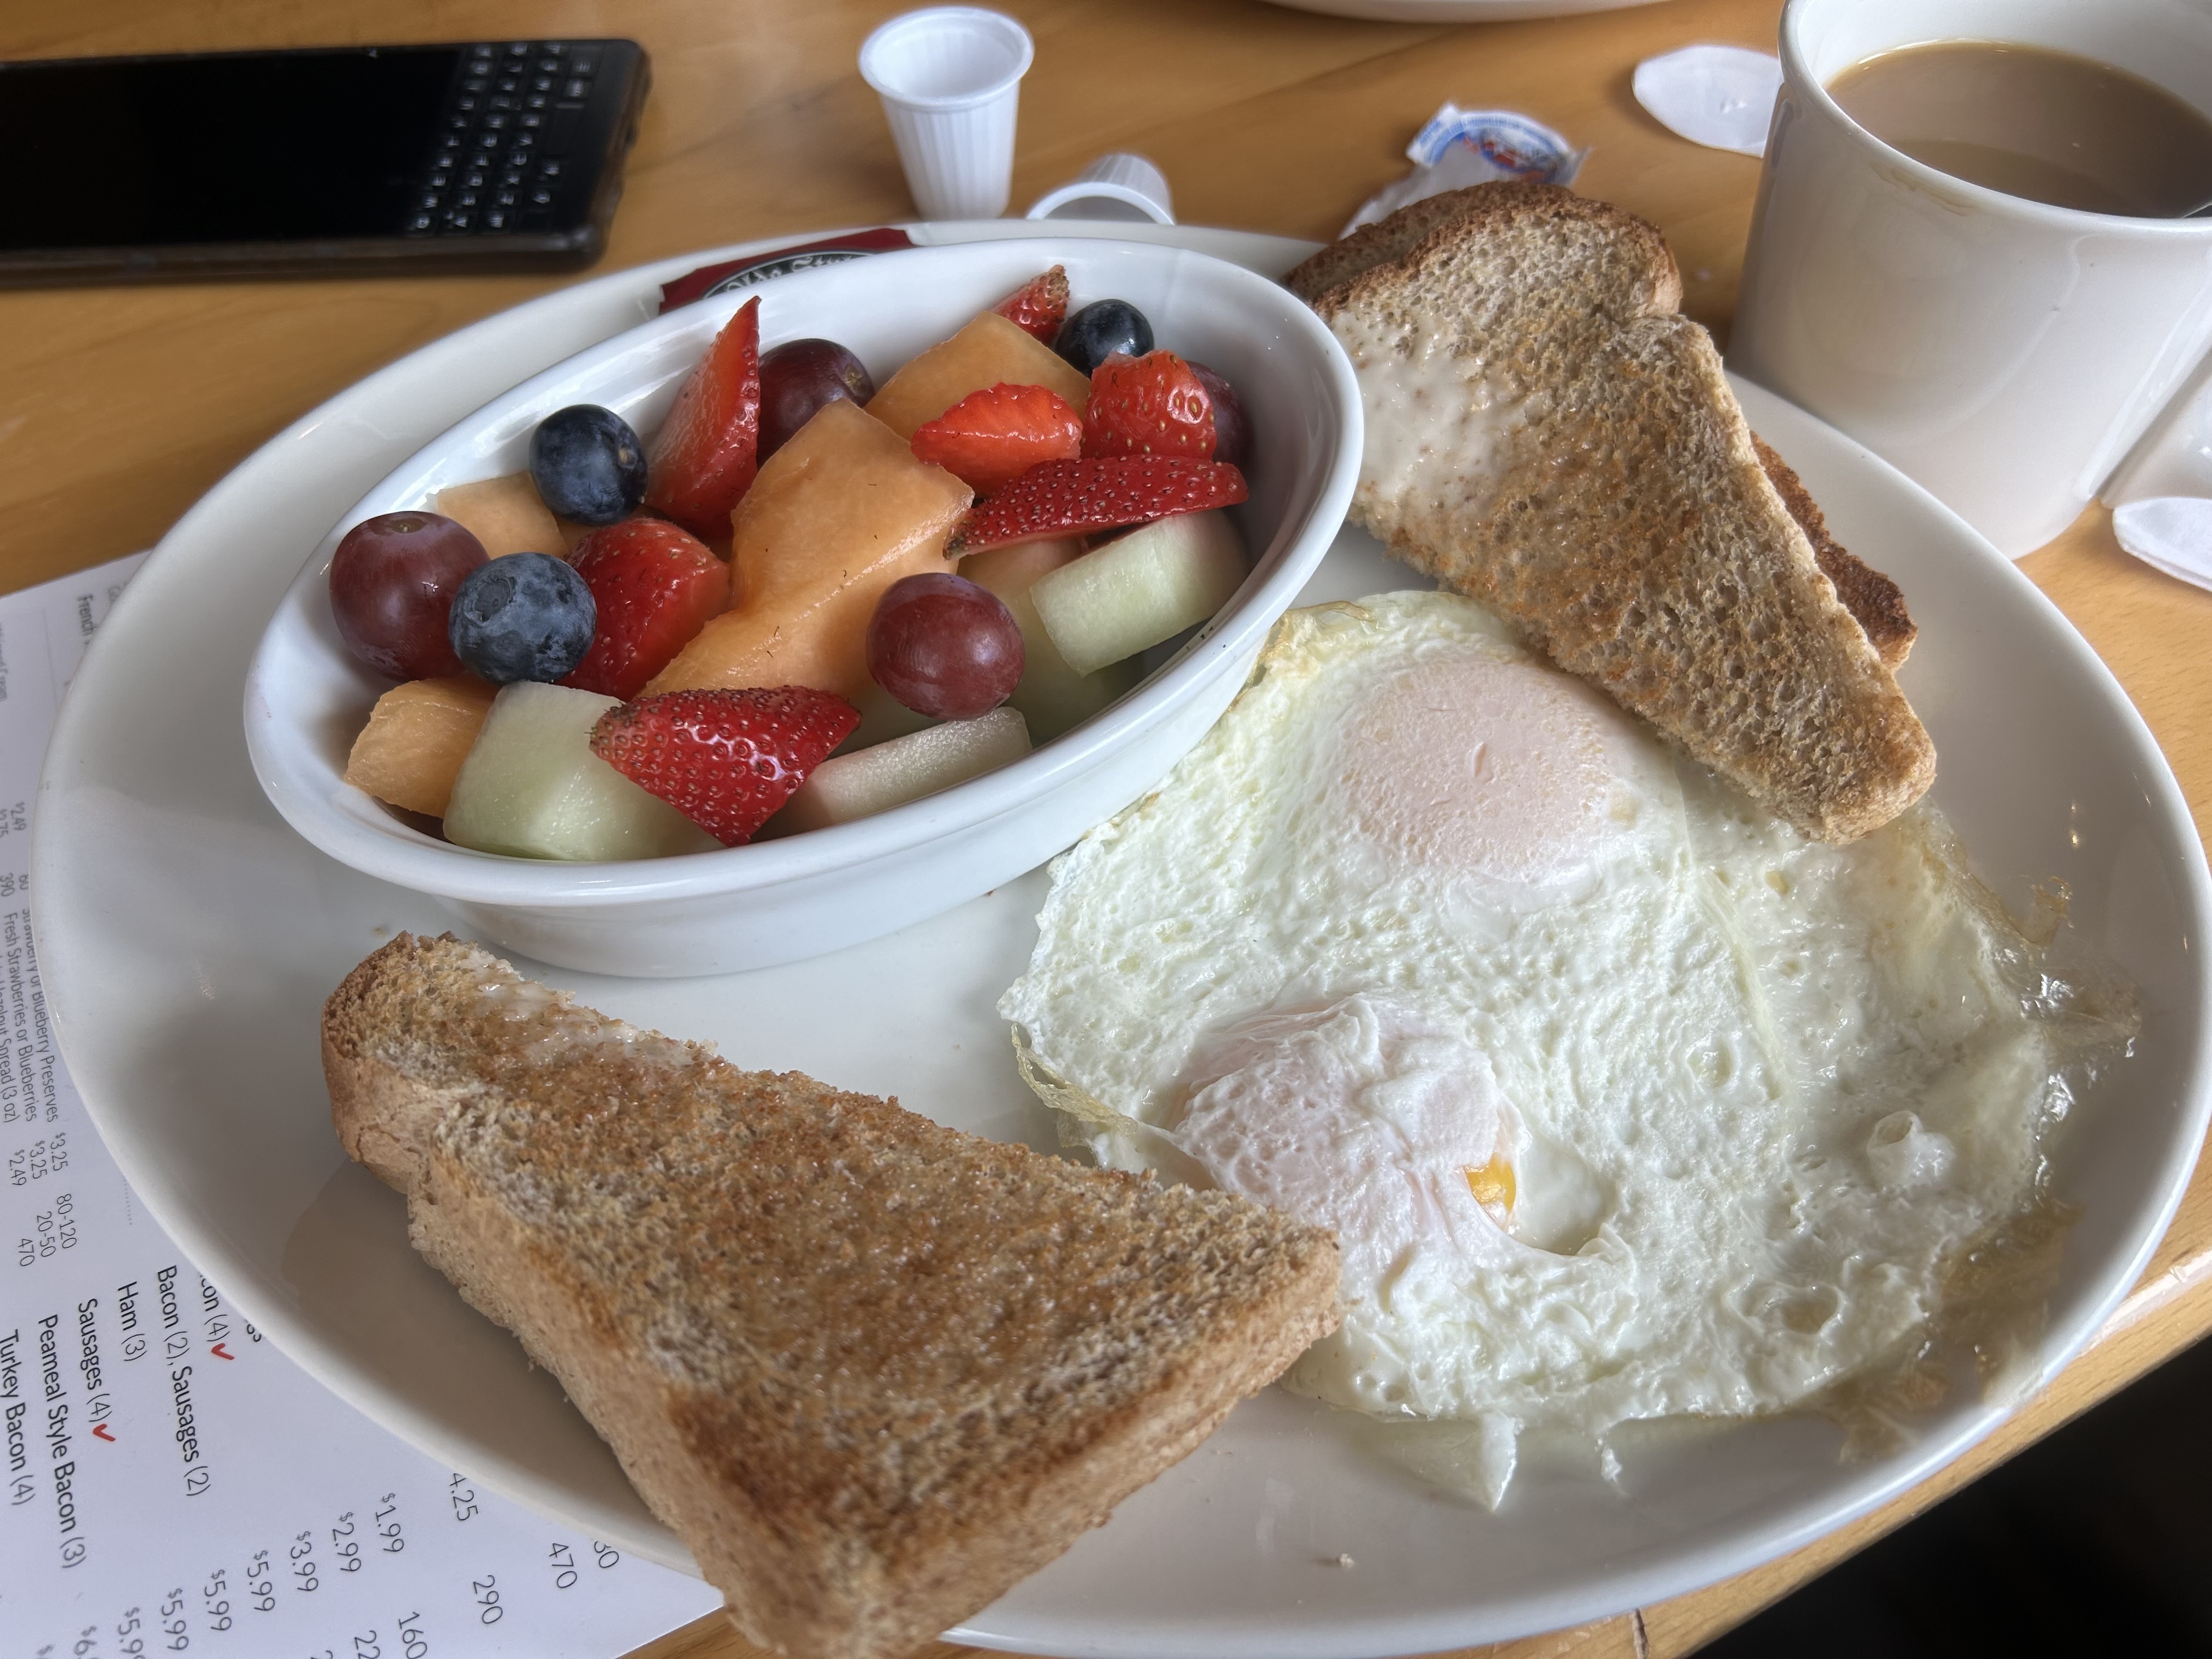 Eggs and fruit salad breakfast